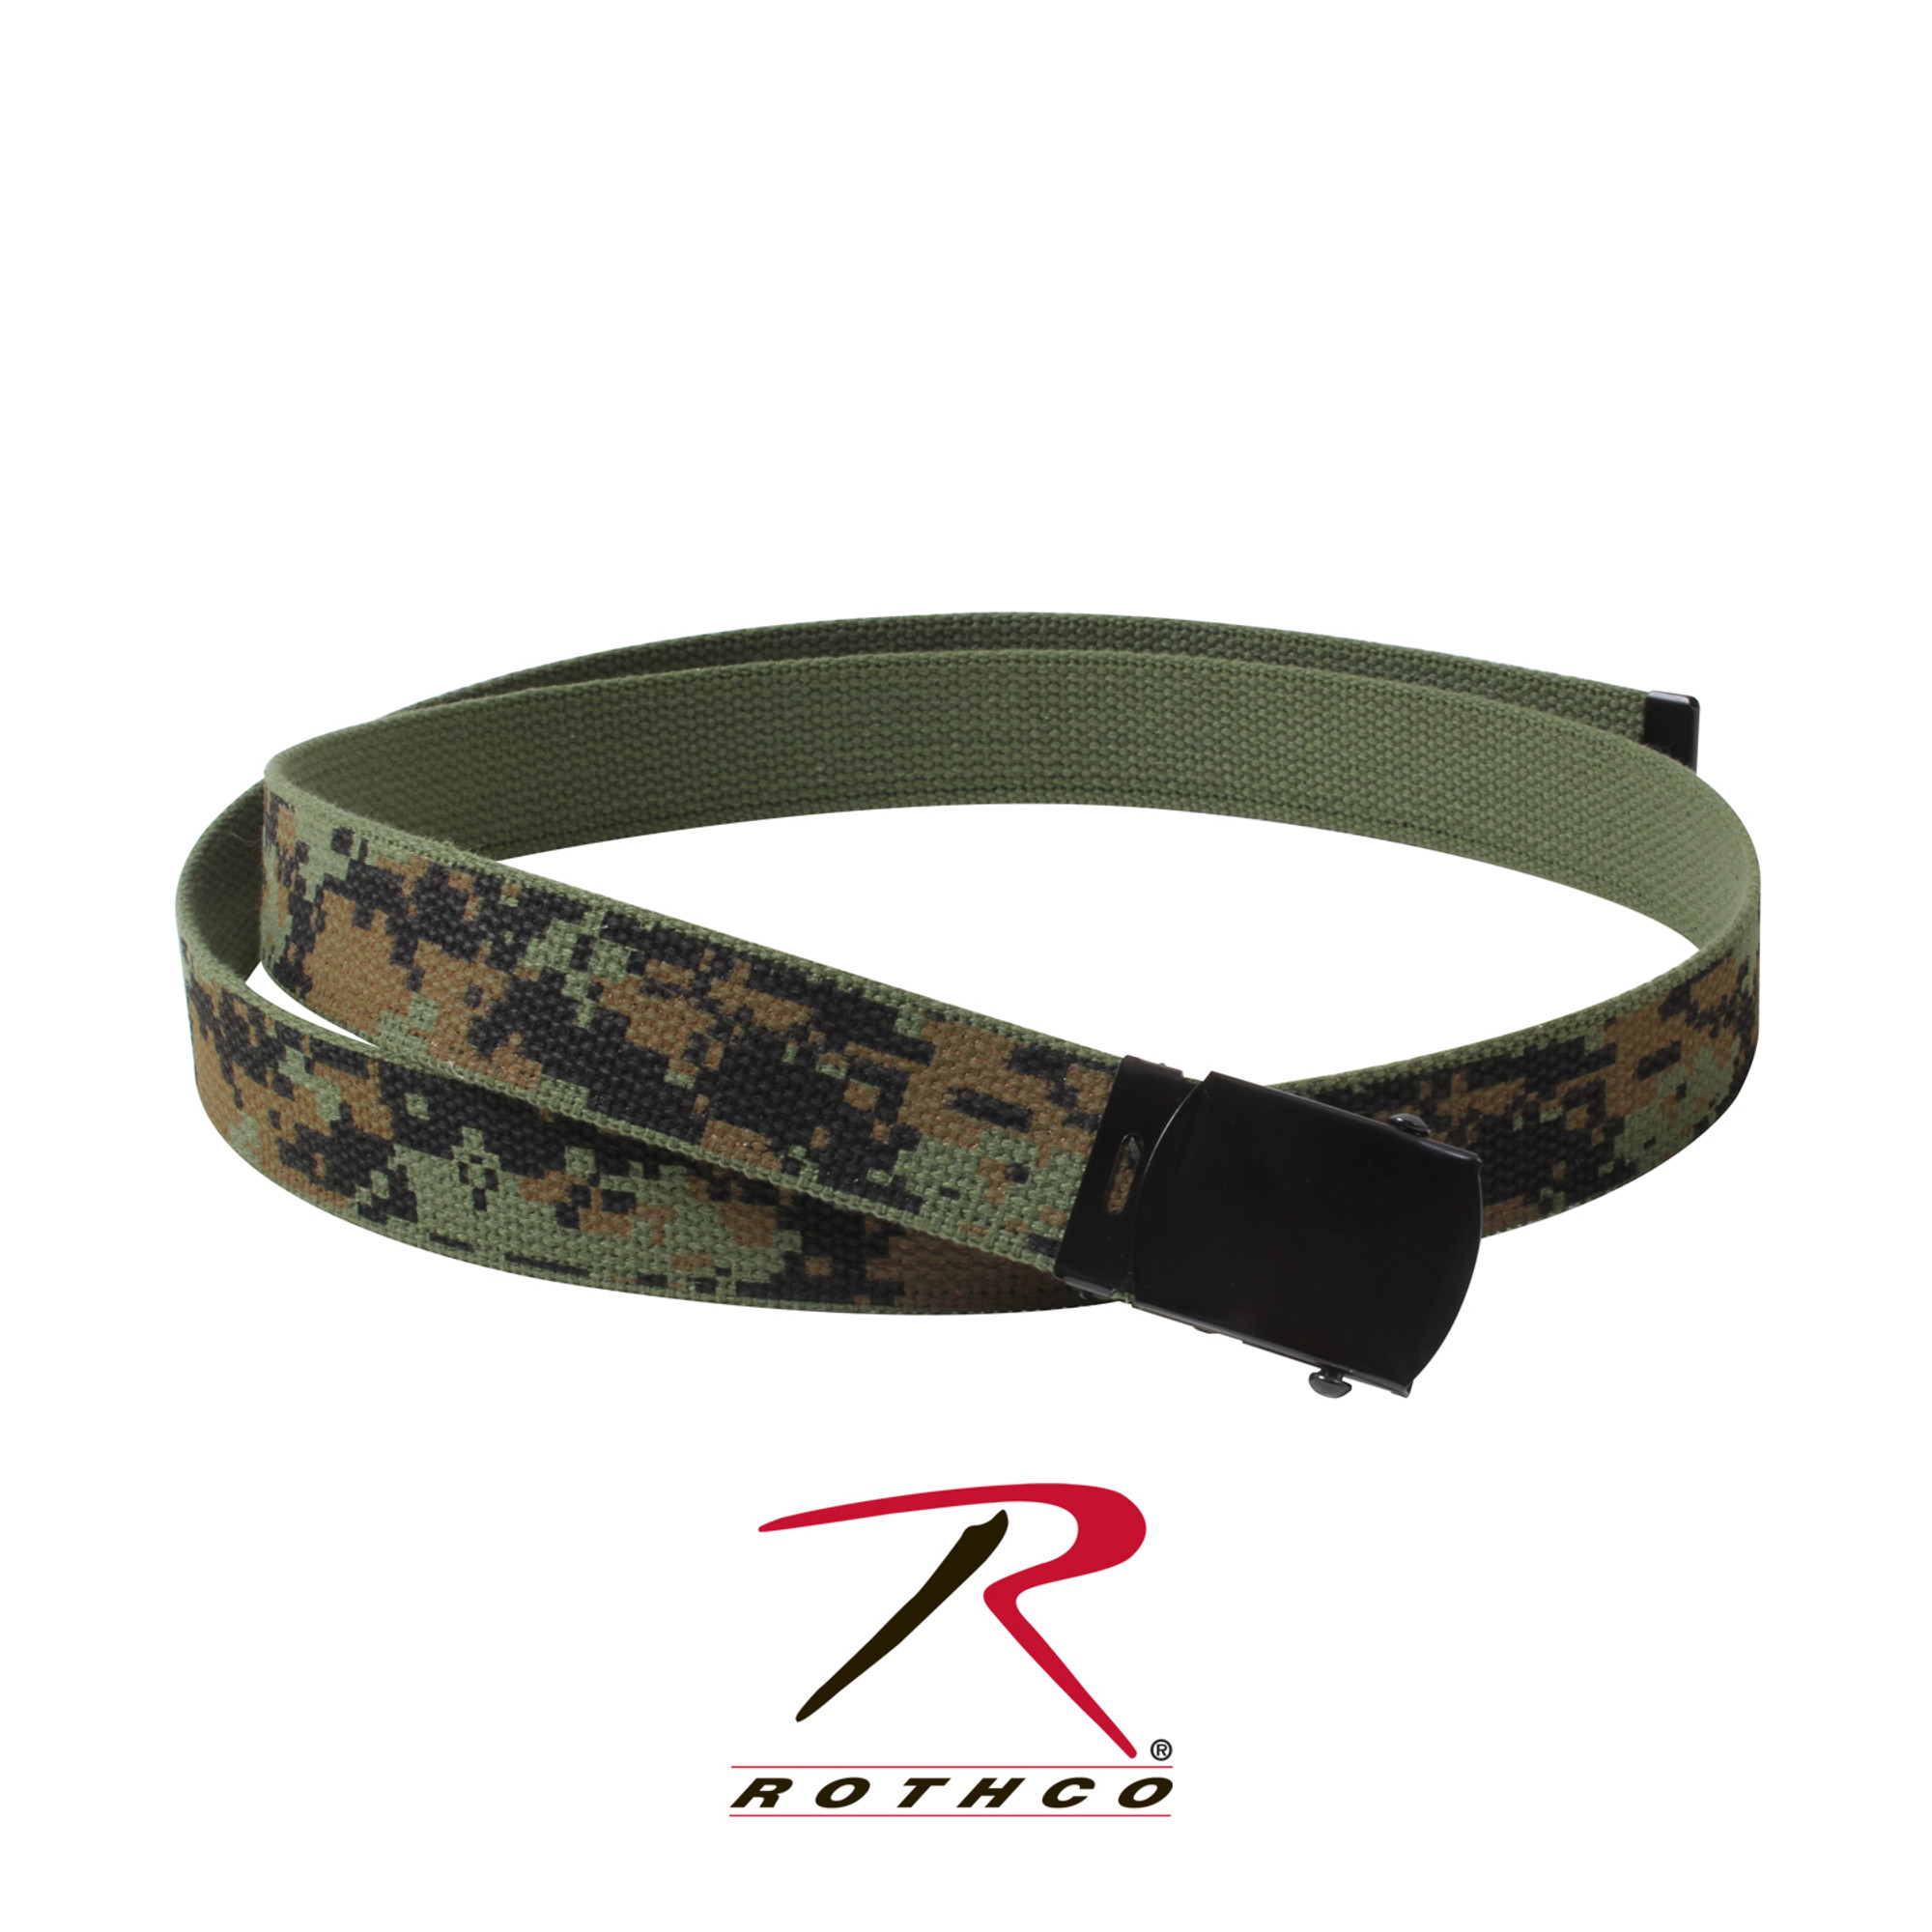 Rothco Camo Reversible Web Belt - Woodland Digital/Olive Drab - 54"